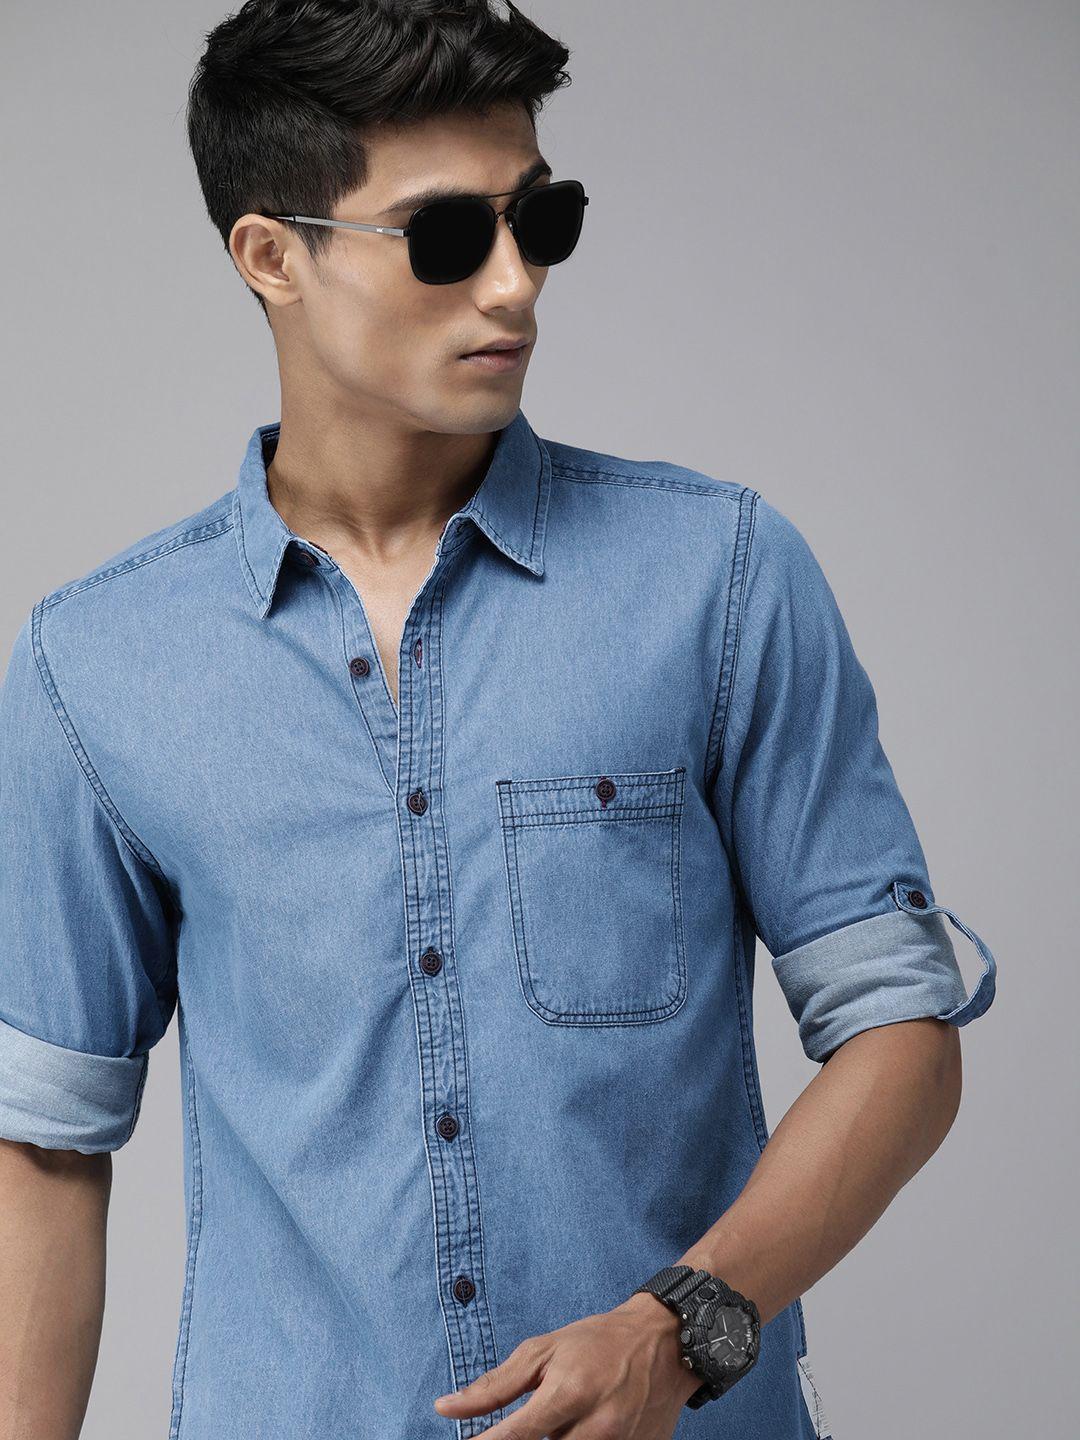 the-roadster-lifestyle-co-men-blue-solid-cotton-denim-shirt